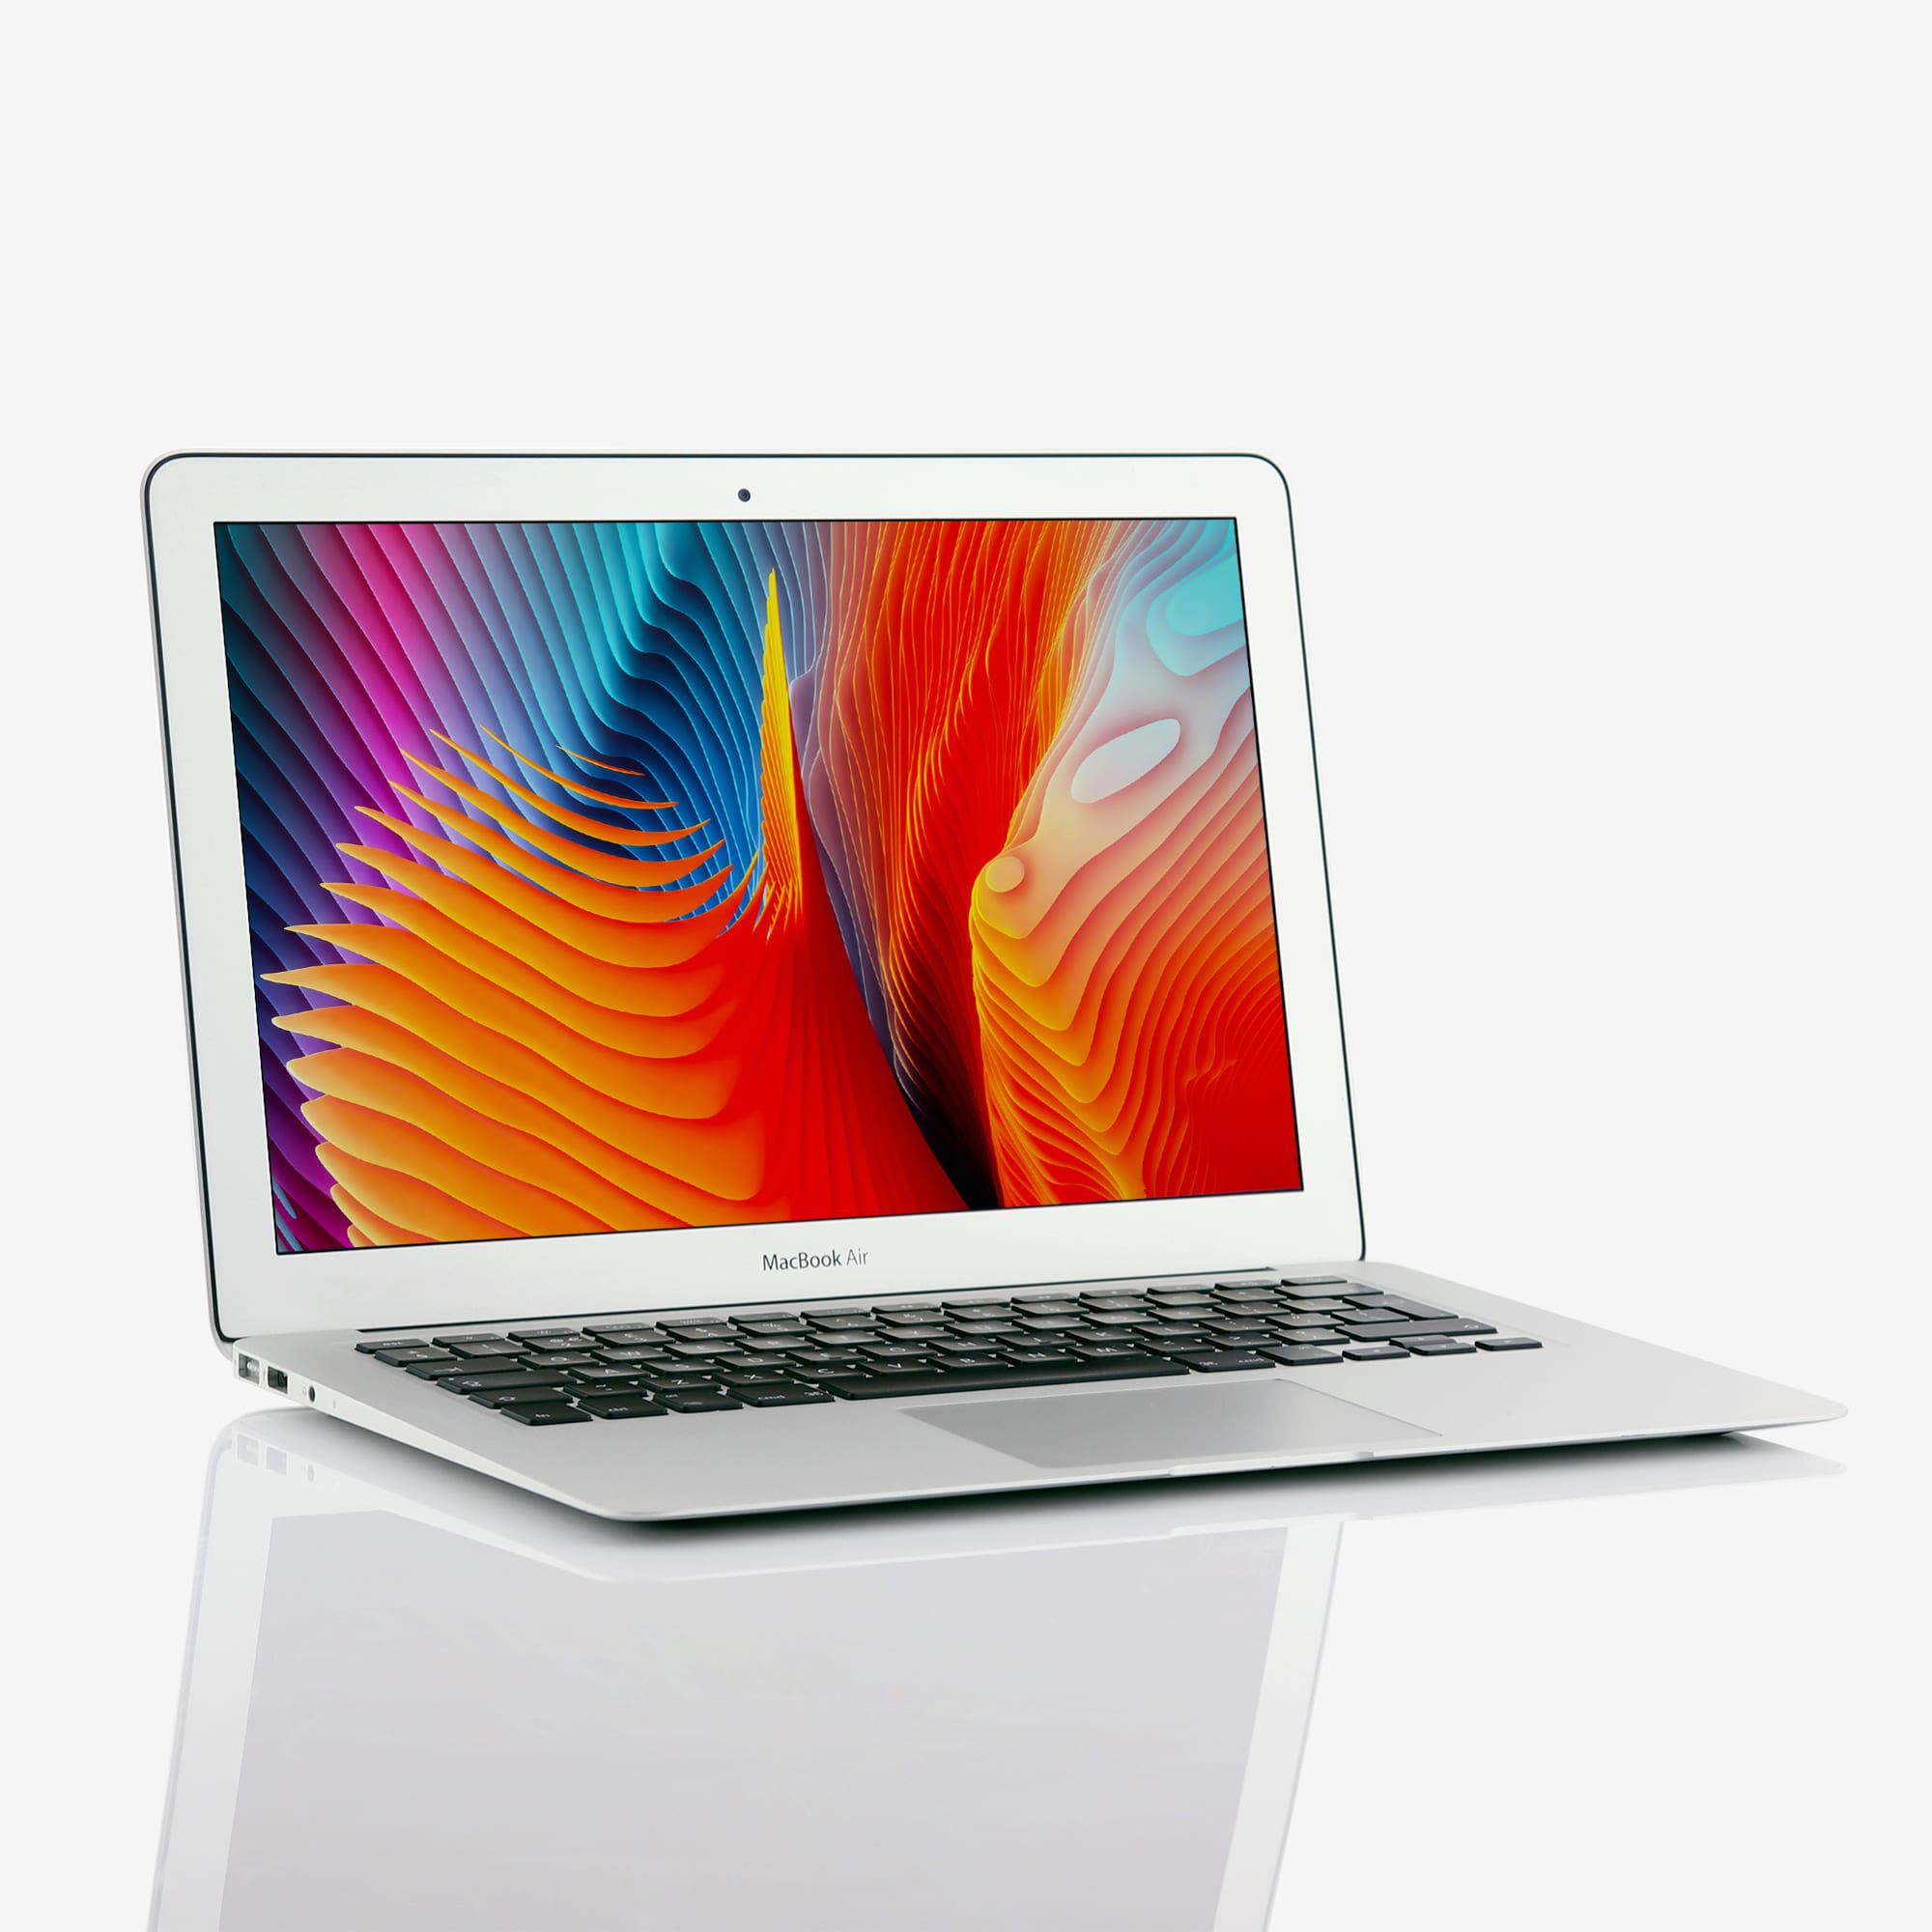 1 x Apple MacBook Air 13 Inch Dual-Core i5 1.80 GHz (2012)